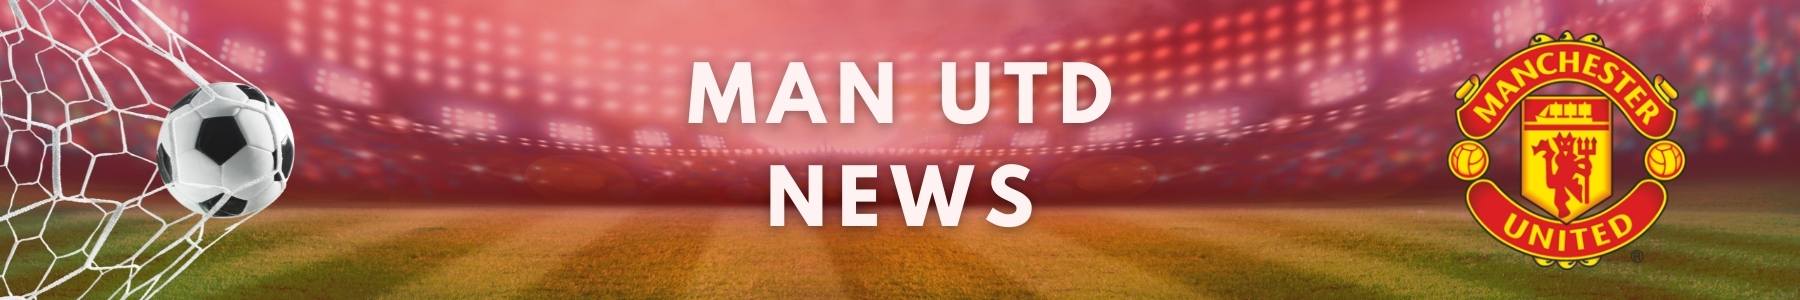 Man Utd - Latest News